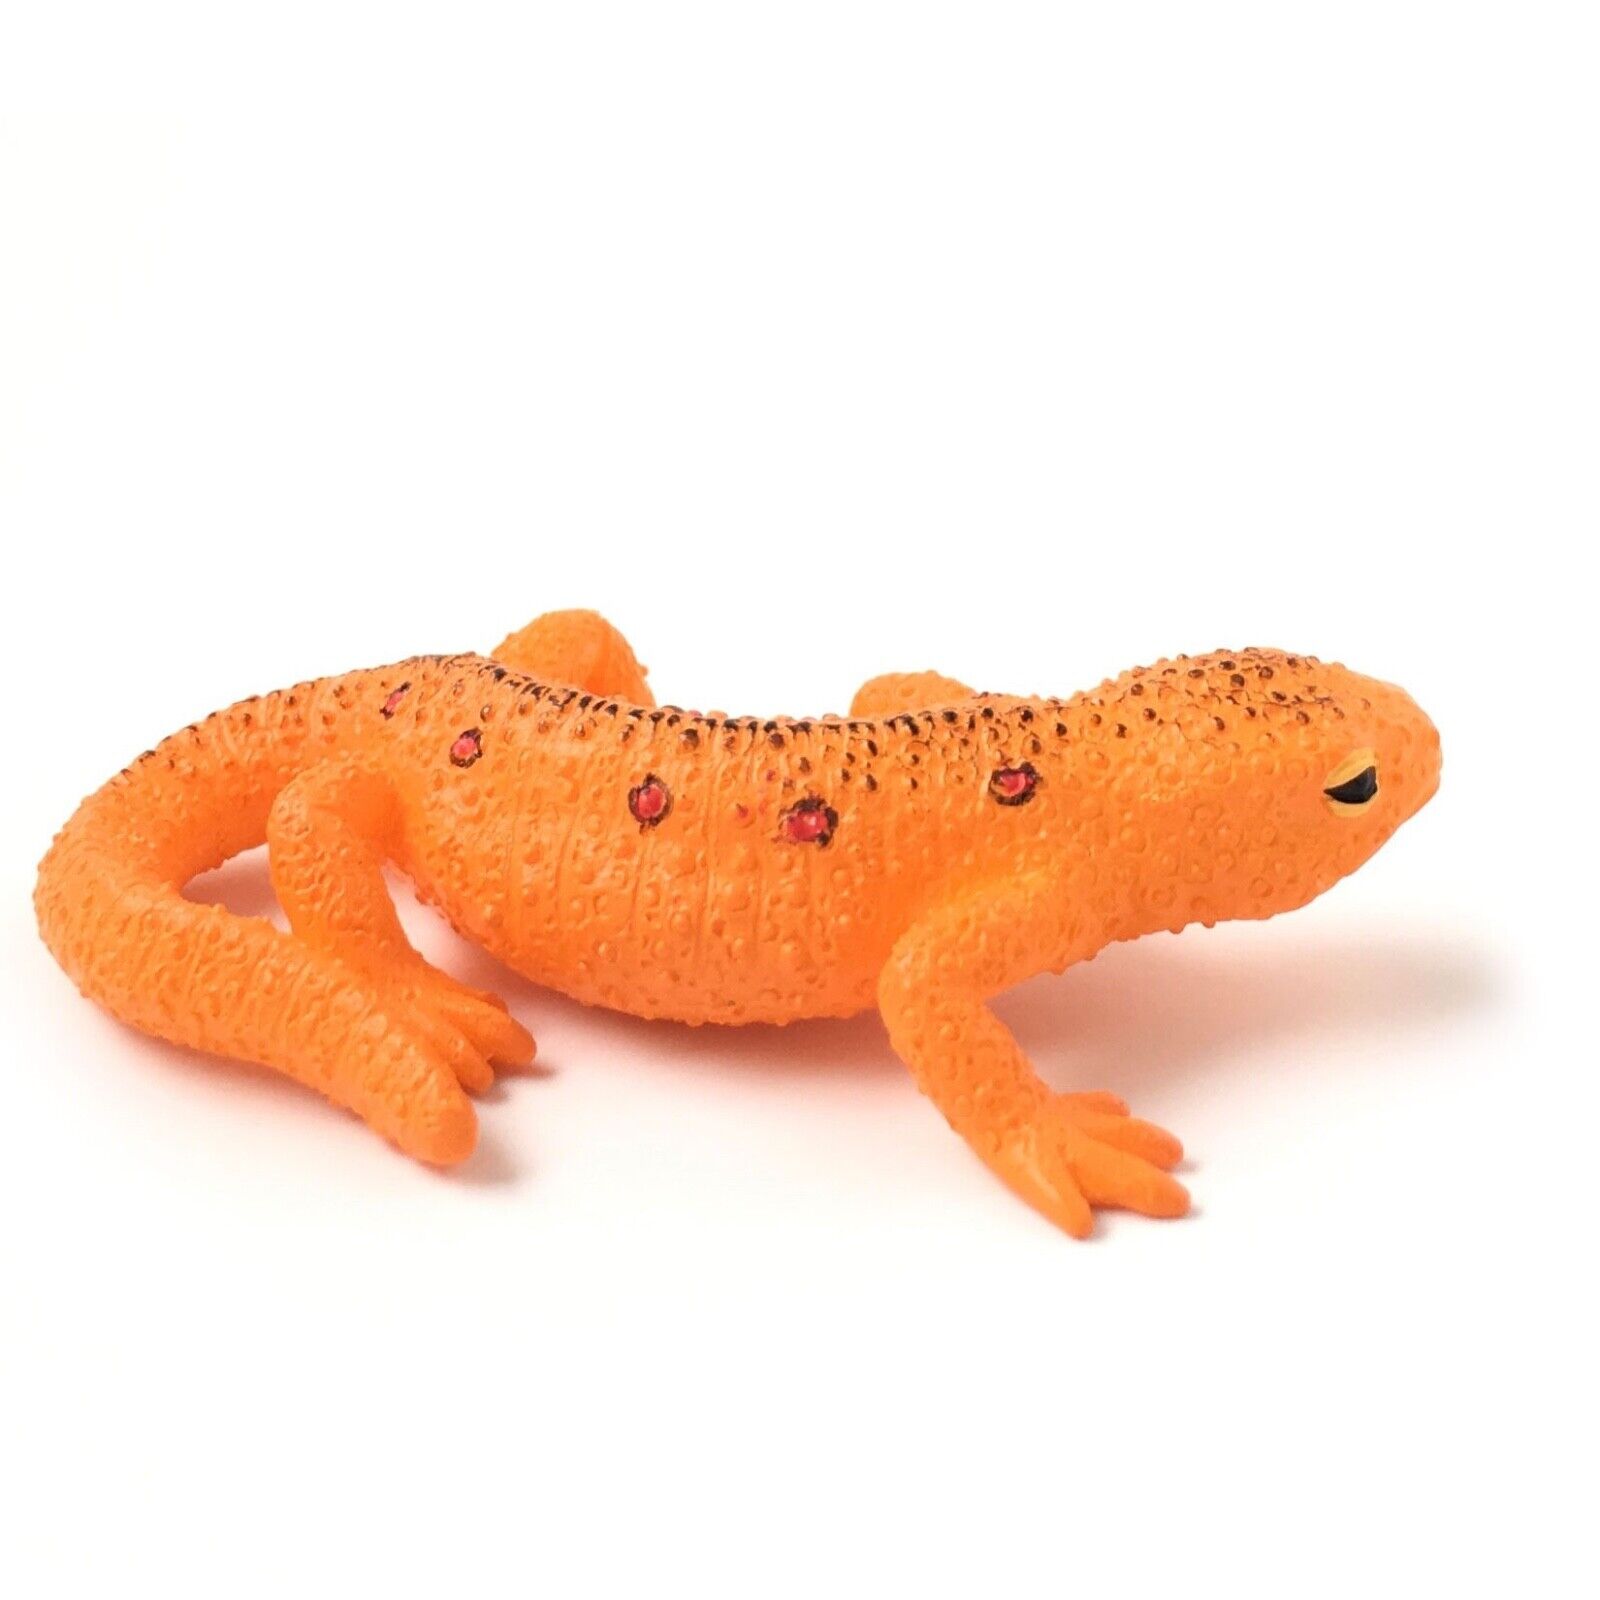 RARE Yowie Red Spotted Newt Salamander animal PVC mini figure figurine model